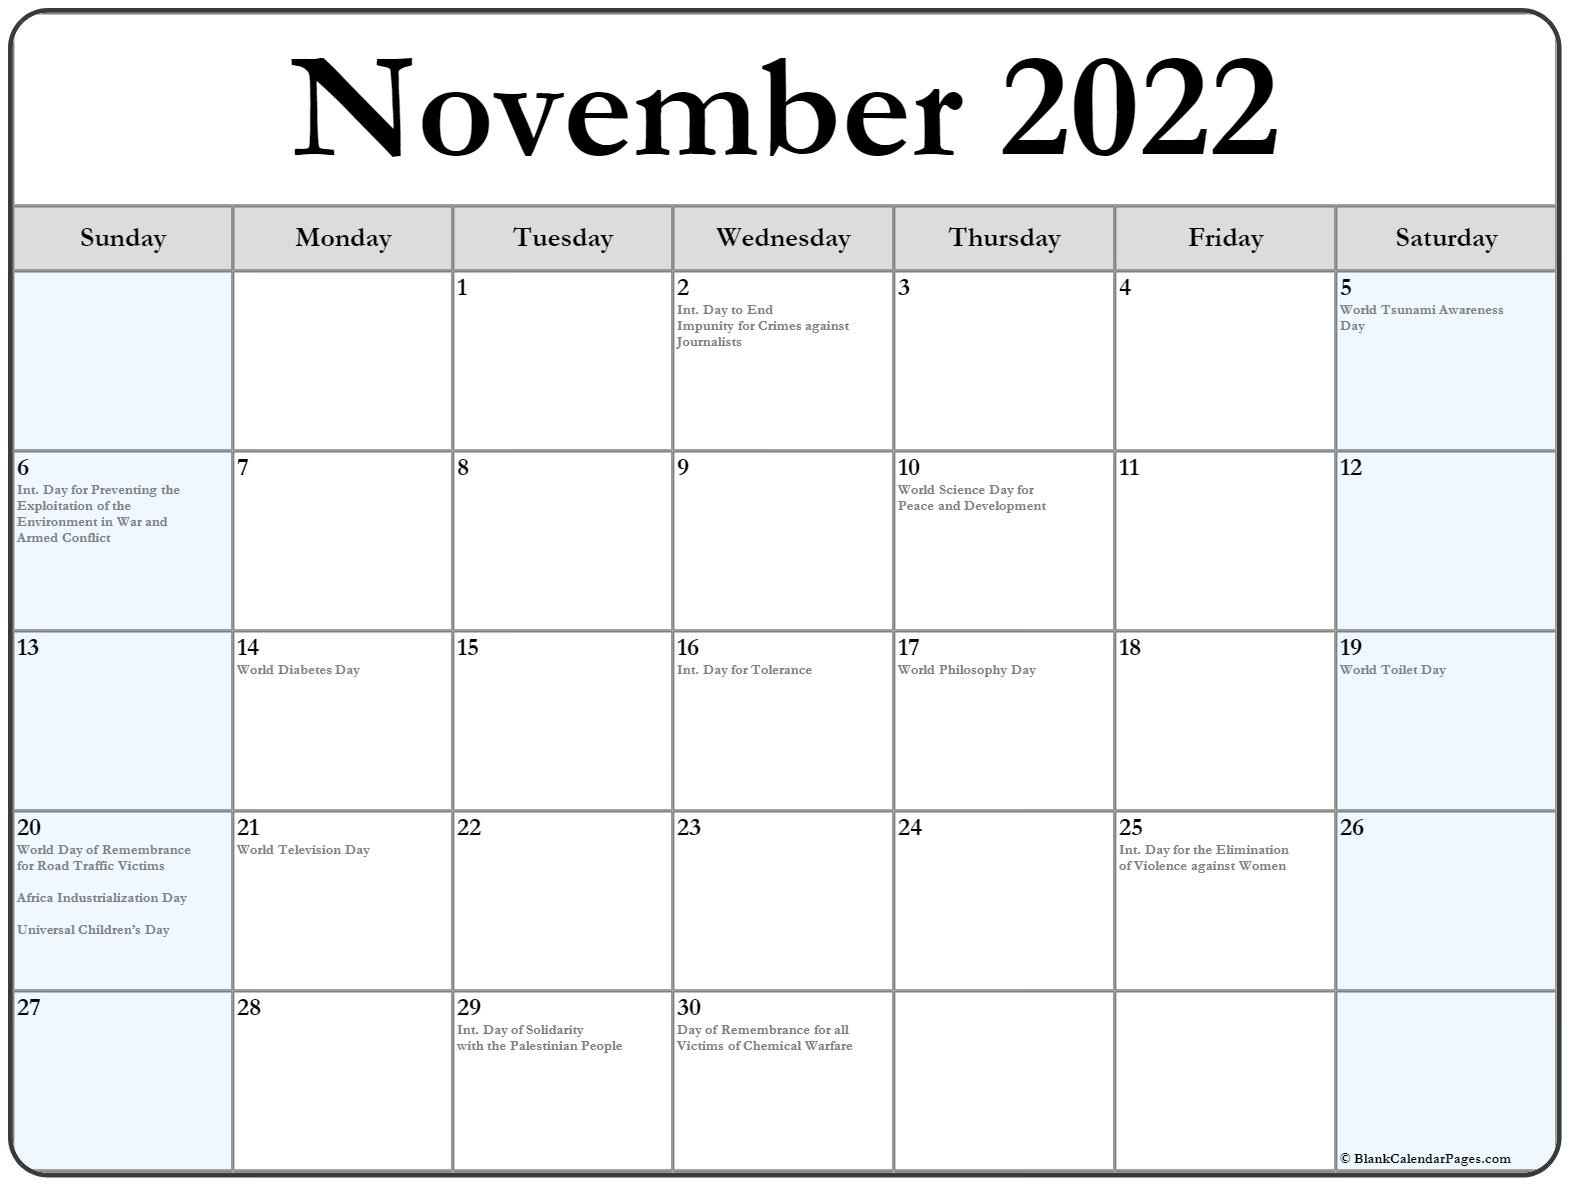 Get 365 Calendar November 2022